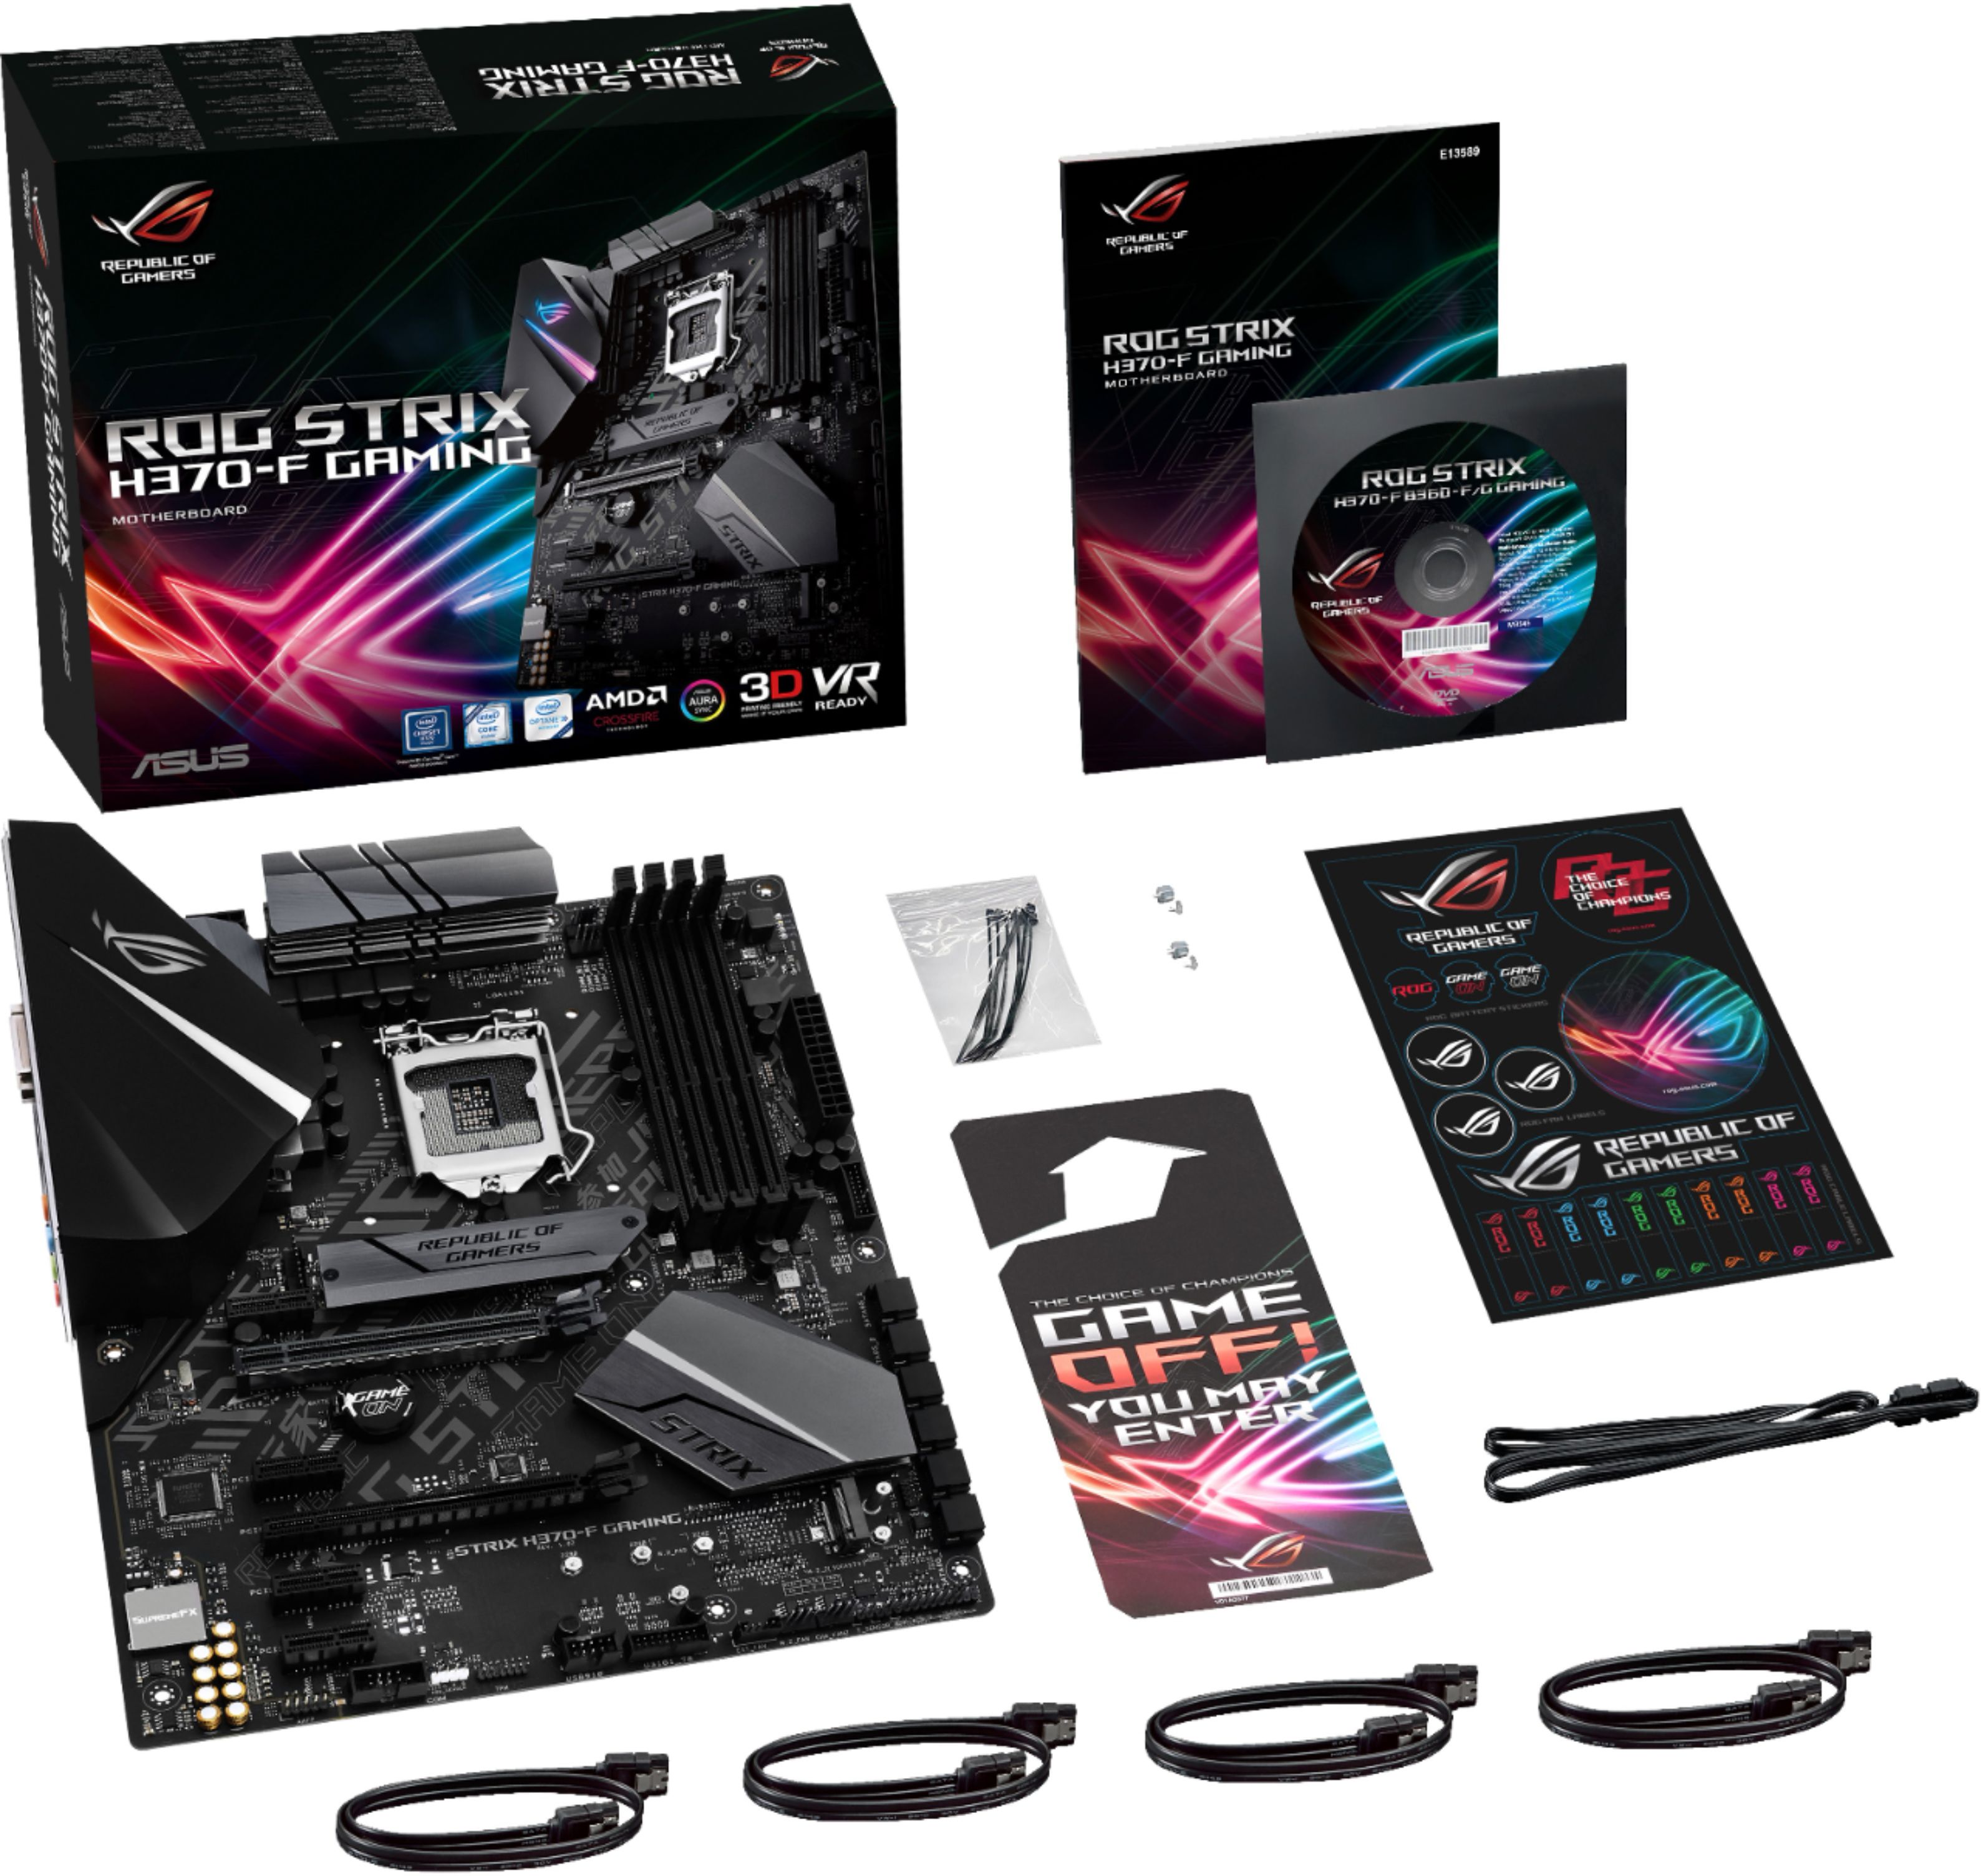 Asus Rog Strix H370 F Gaming Socket Lga1151 Usb 3 1 Gen 1 Intel Motherboard With Led Lighting Strix H370 F Gaming Best Buy